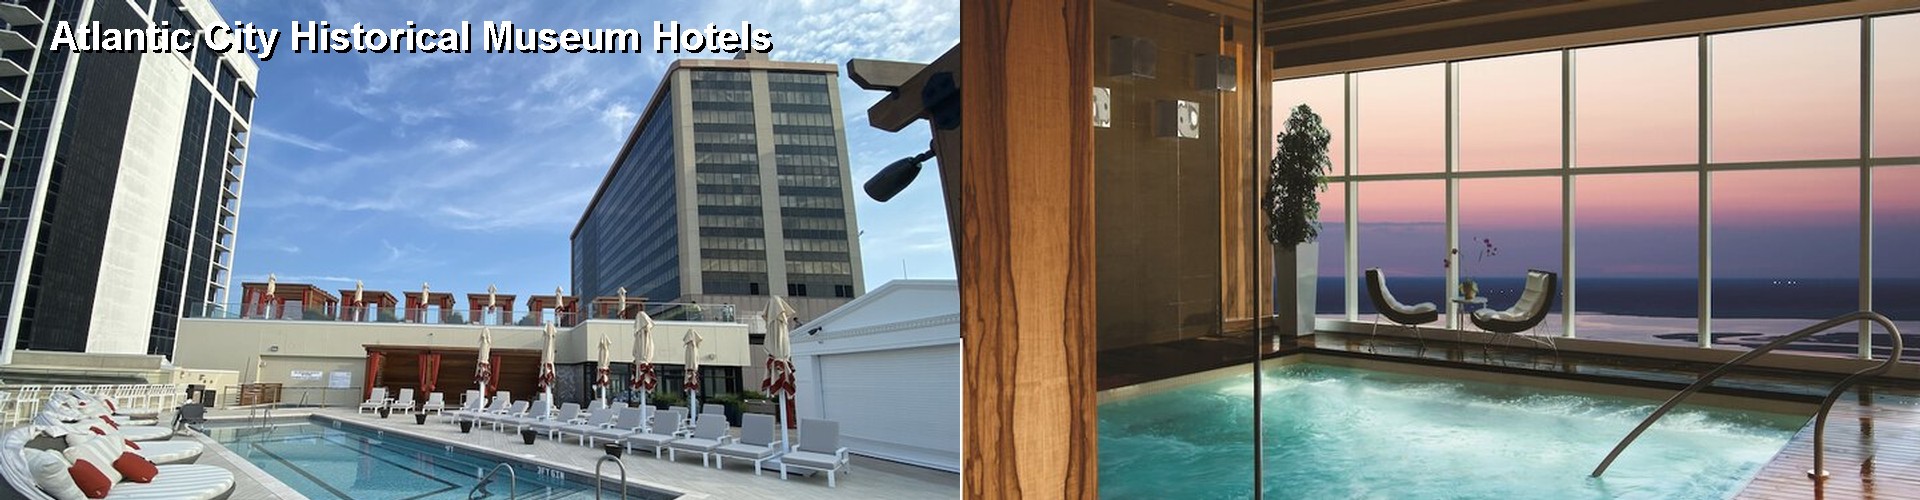 5 Best Hotels near Atlantic City Historical Museum